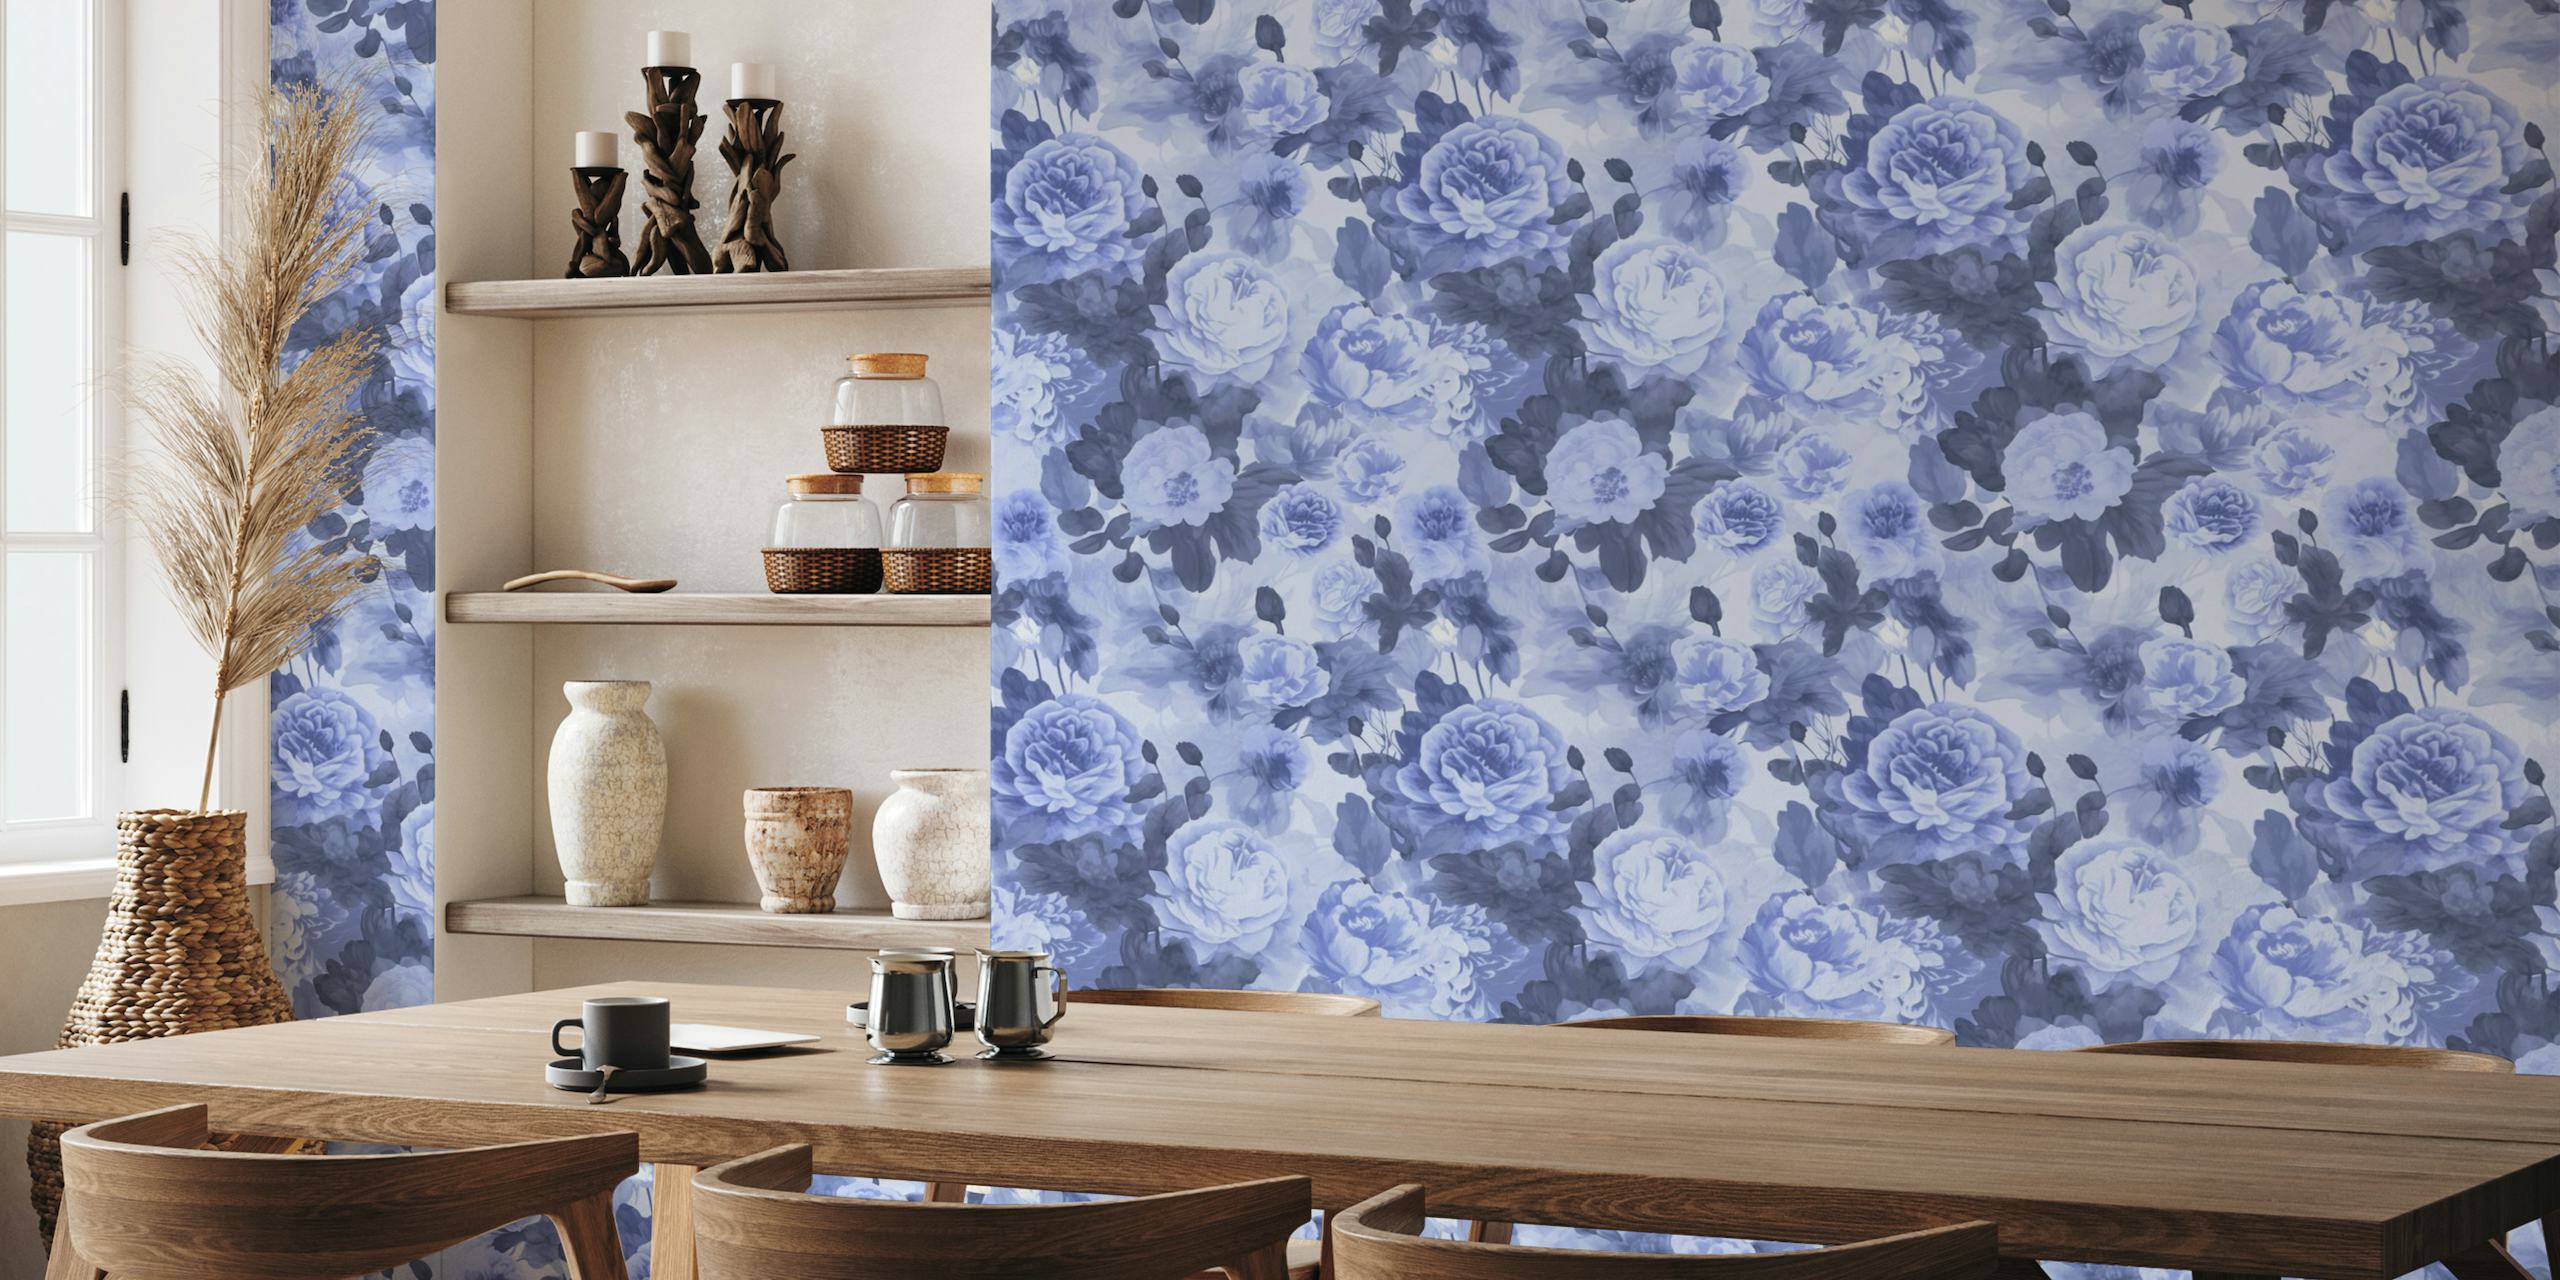 Baroque Roses Floral Nostalgia Design In Moody Colors Blue wallpaper